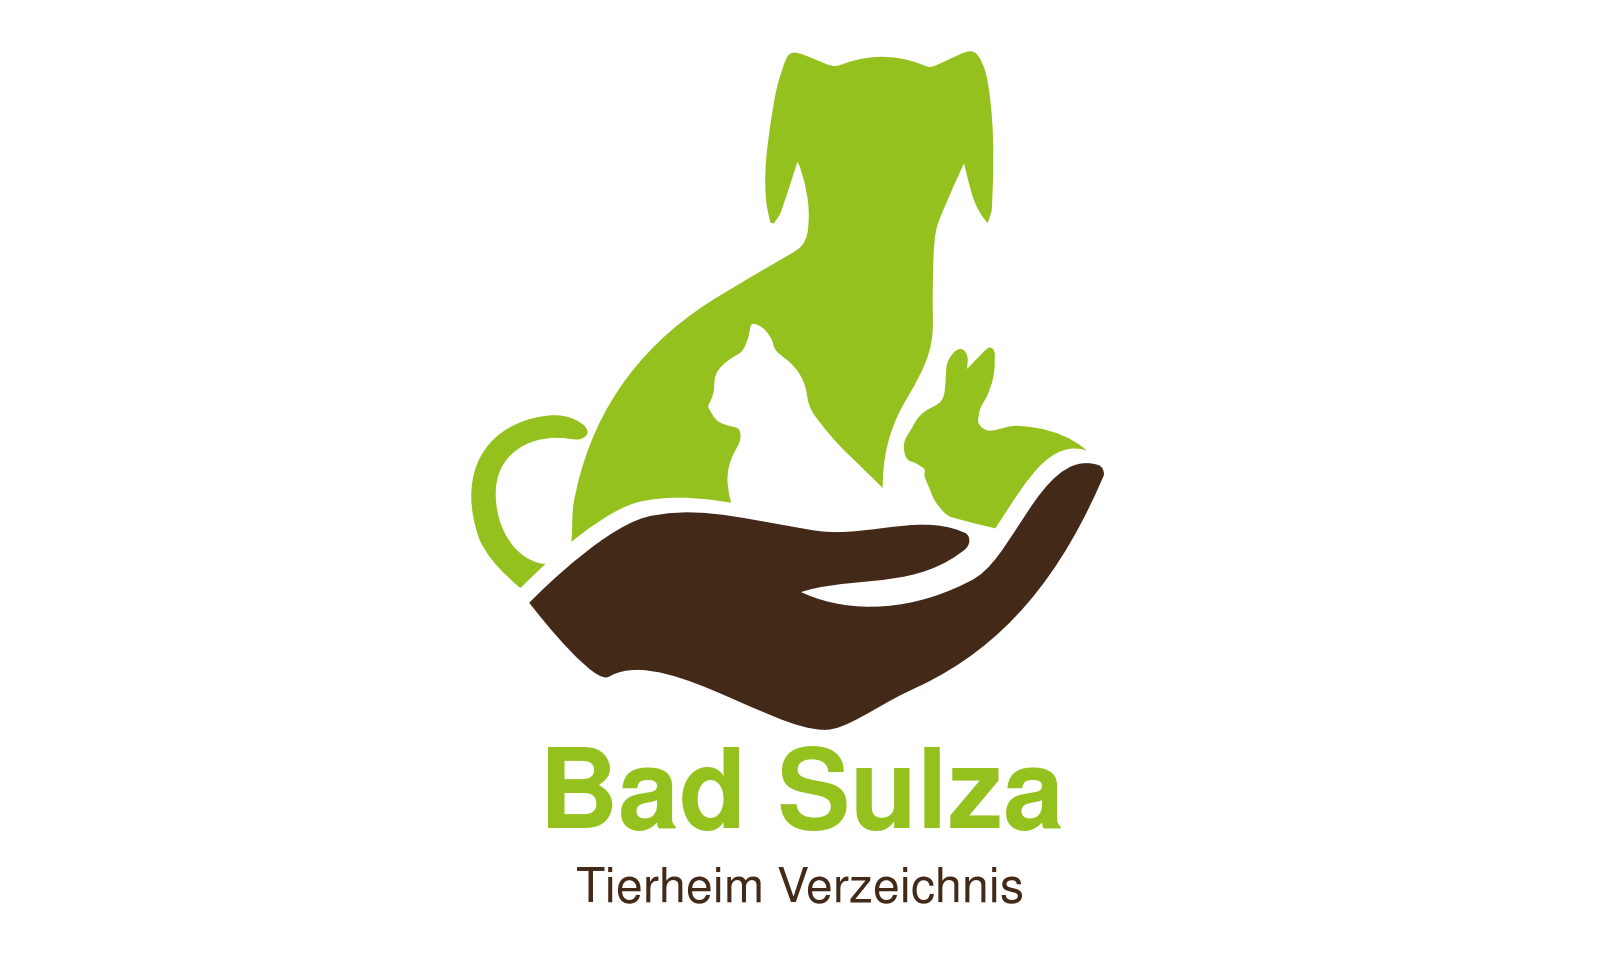 Tierheim Bad Sulza